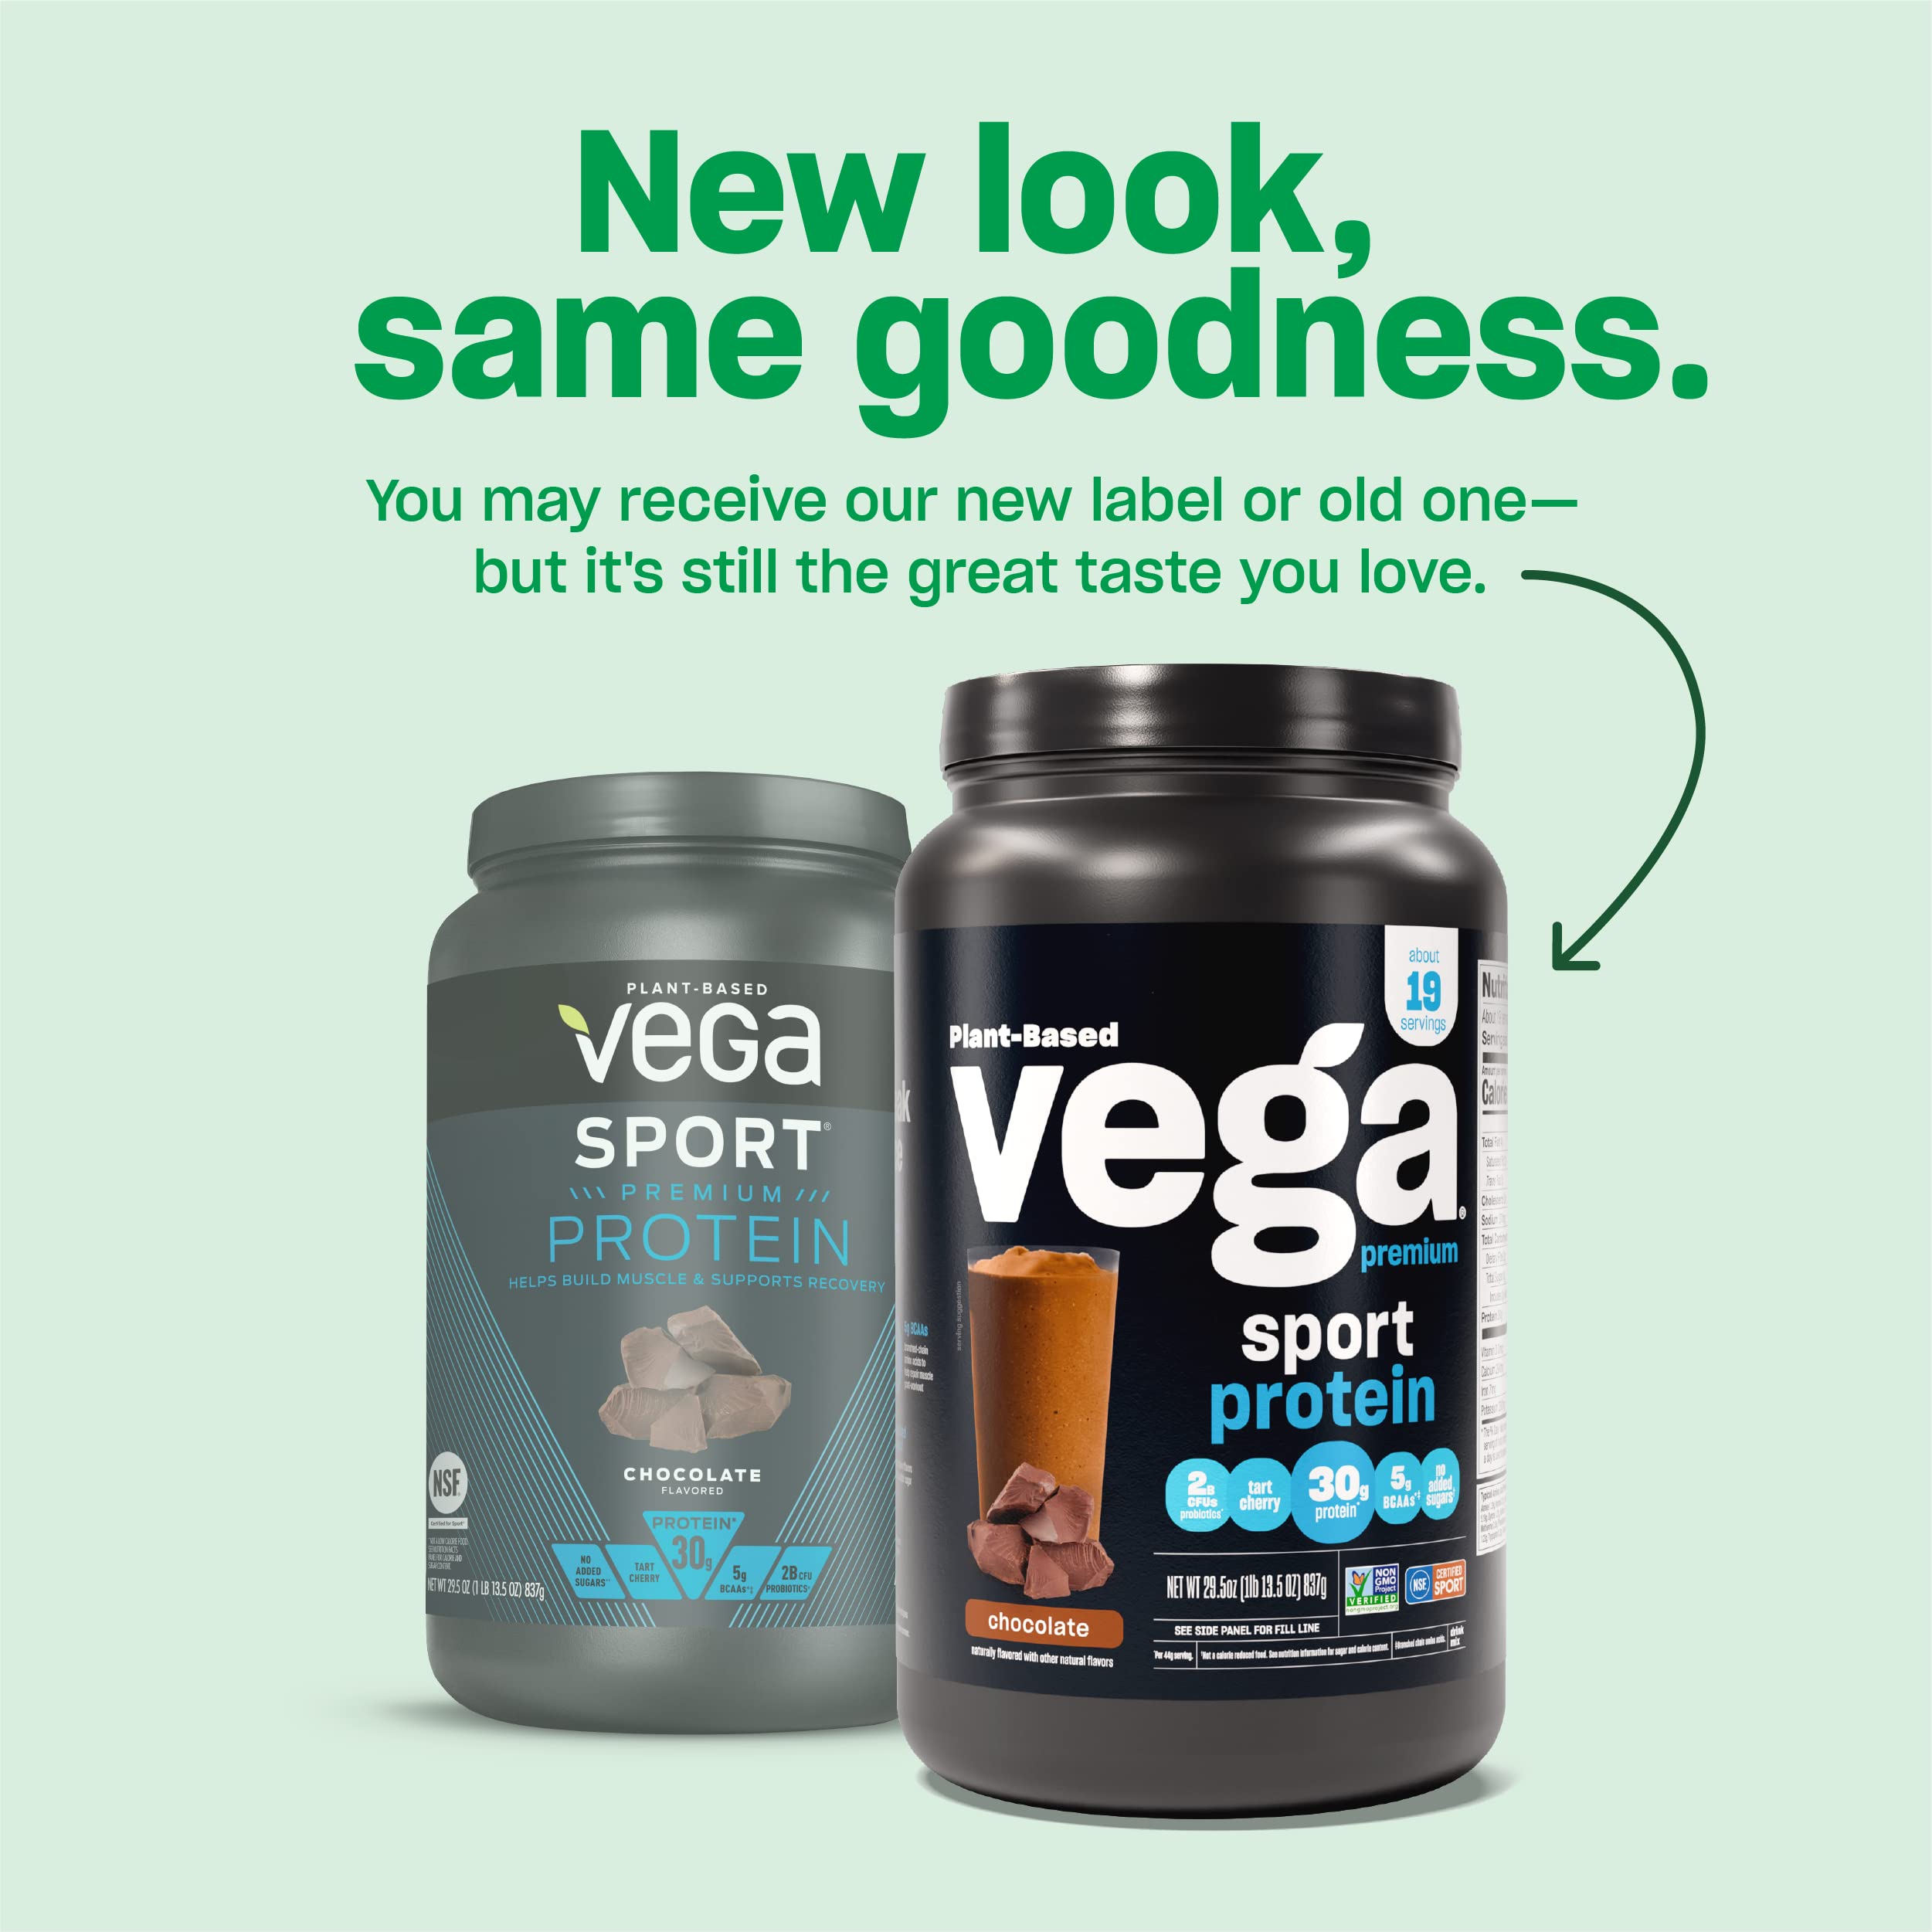 Vega Sport Premium Vegan Protein Powder, Vanilla - 30g Plant Based Protein, 5g BCAAs, Low Carb, Keto, Dairy Free, Gluten Free, Non GMO, Pea Protein for Women & Men, 4.1 lbs (Packaging May Vary)